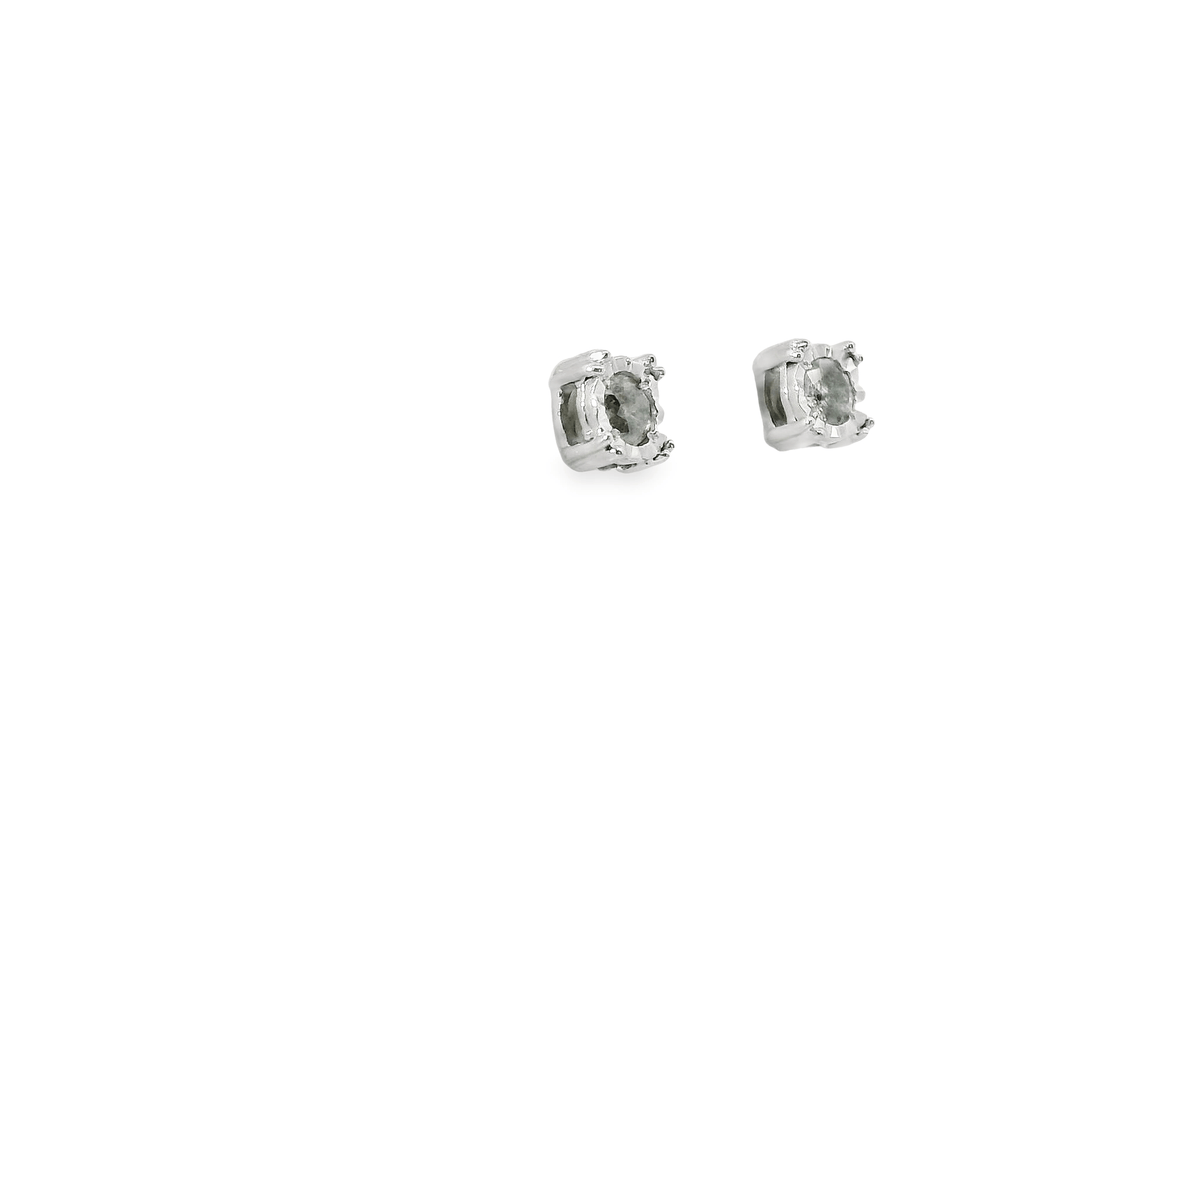 10k Gold Diamond Illusion Stud Earrings - The Real Jewelry CompanyThe Real Jewelry CompanyEarrings